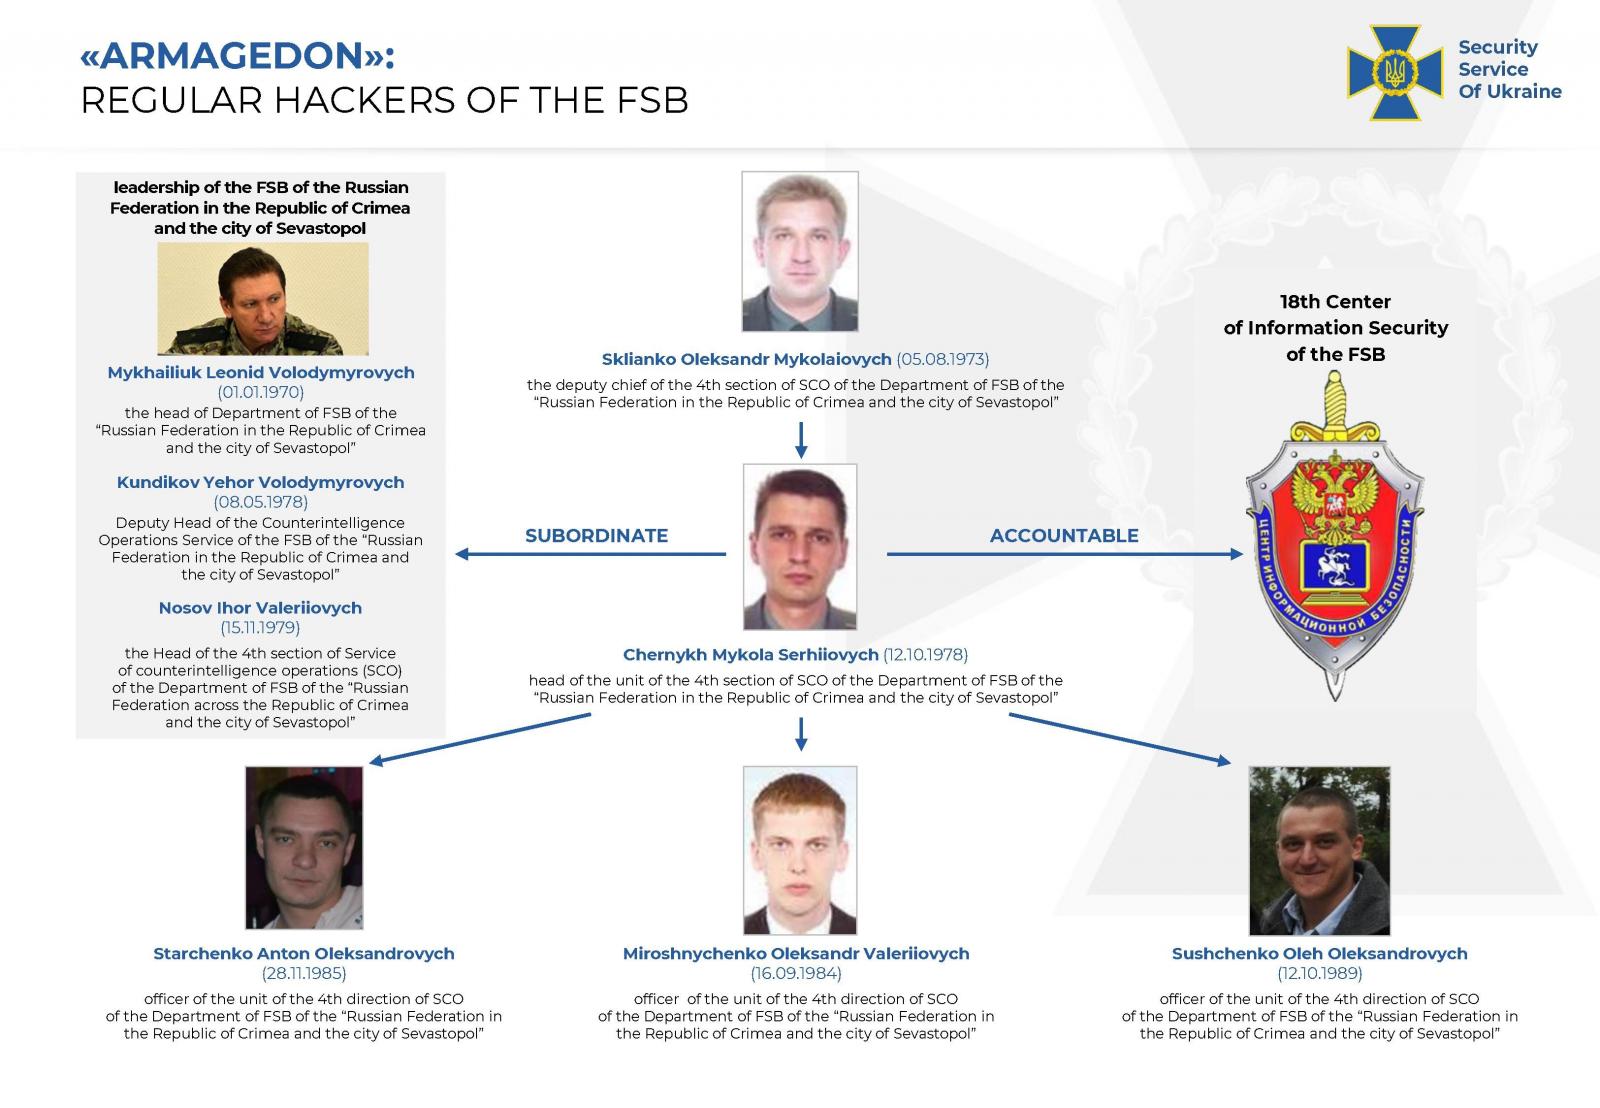 Identities of the five identified Armageddon members